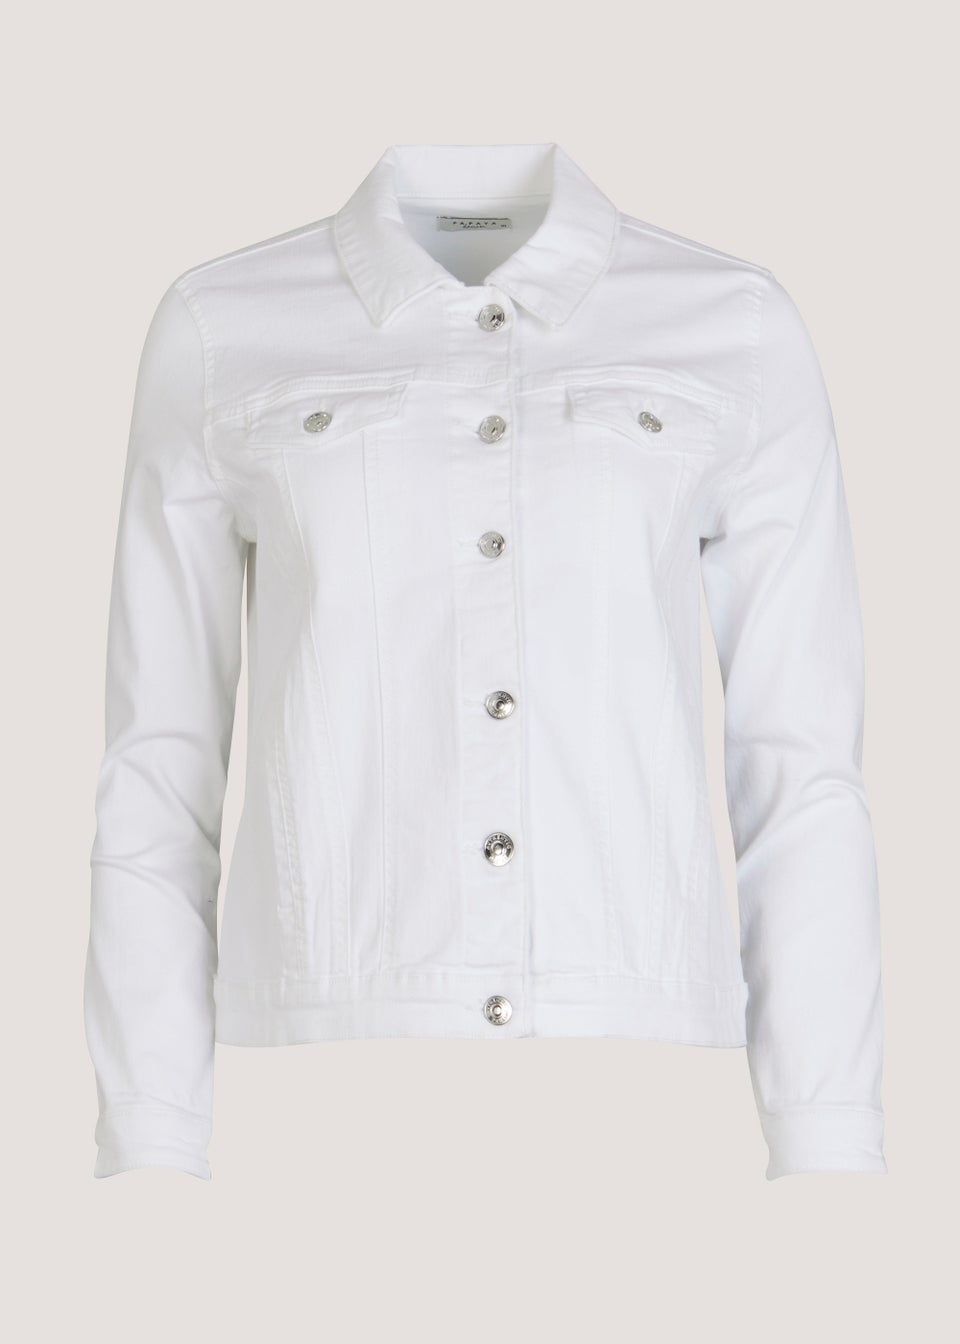 Passionflower Patch White Denim Jacket